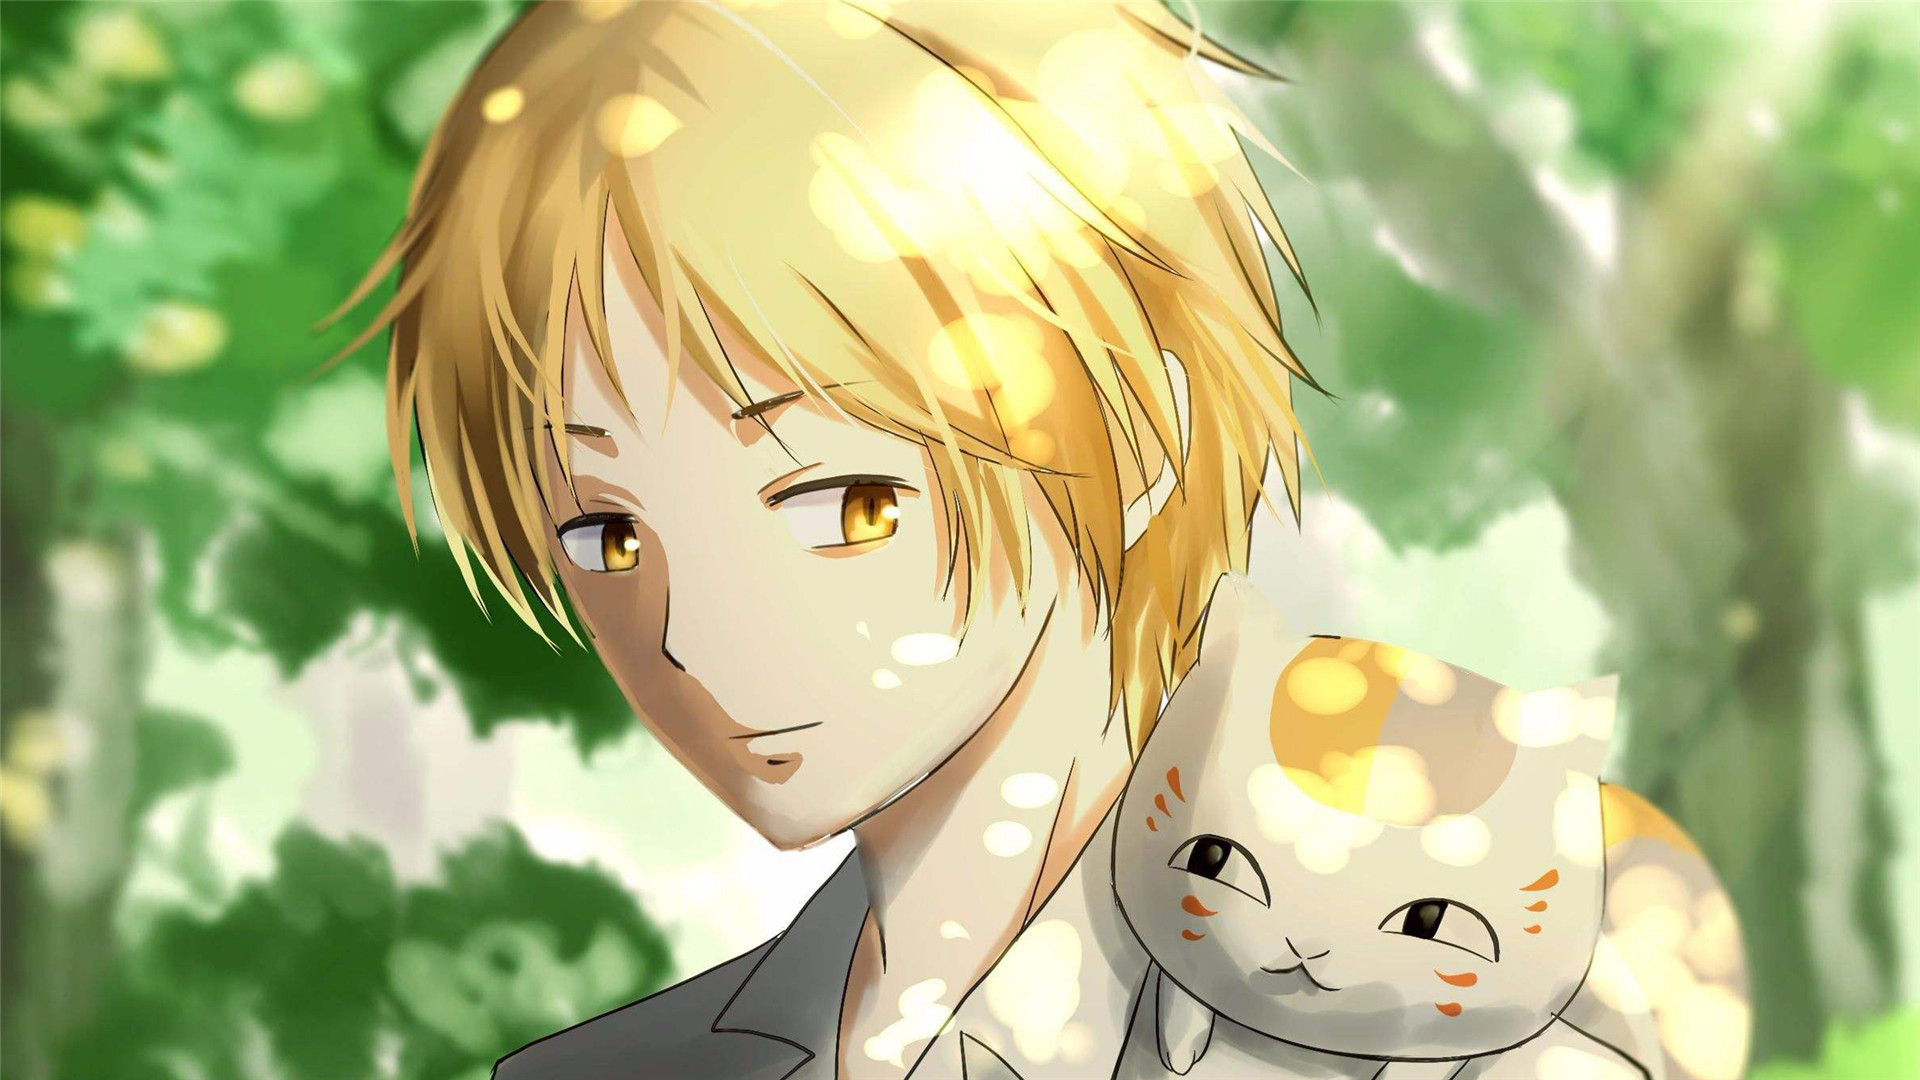 Anime 1920x1080 Natsume Yuujinchou anime boys cats animals trees blonde yellow eyes sunlight